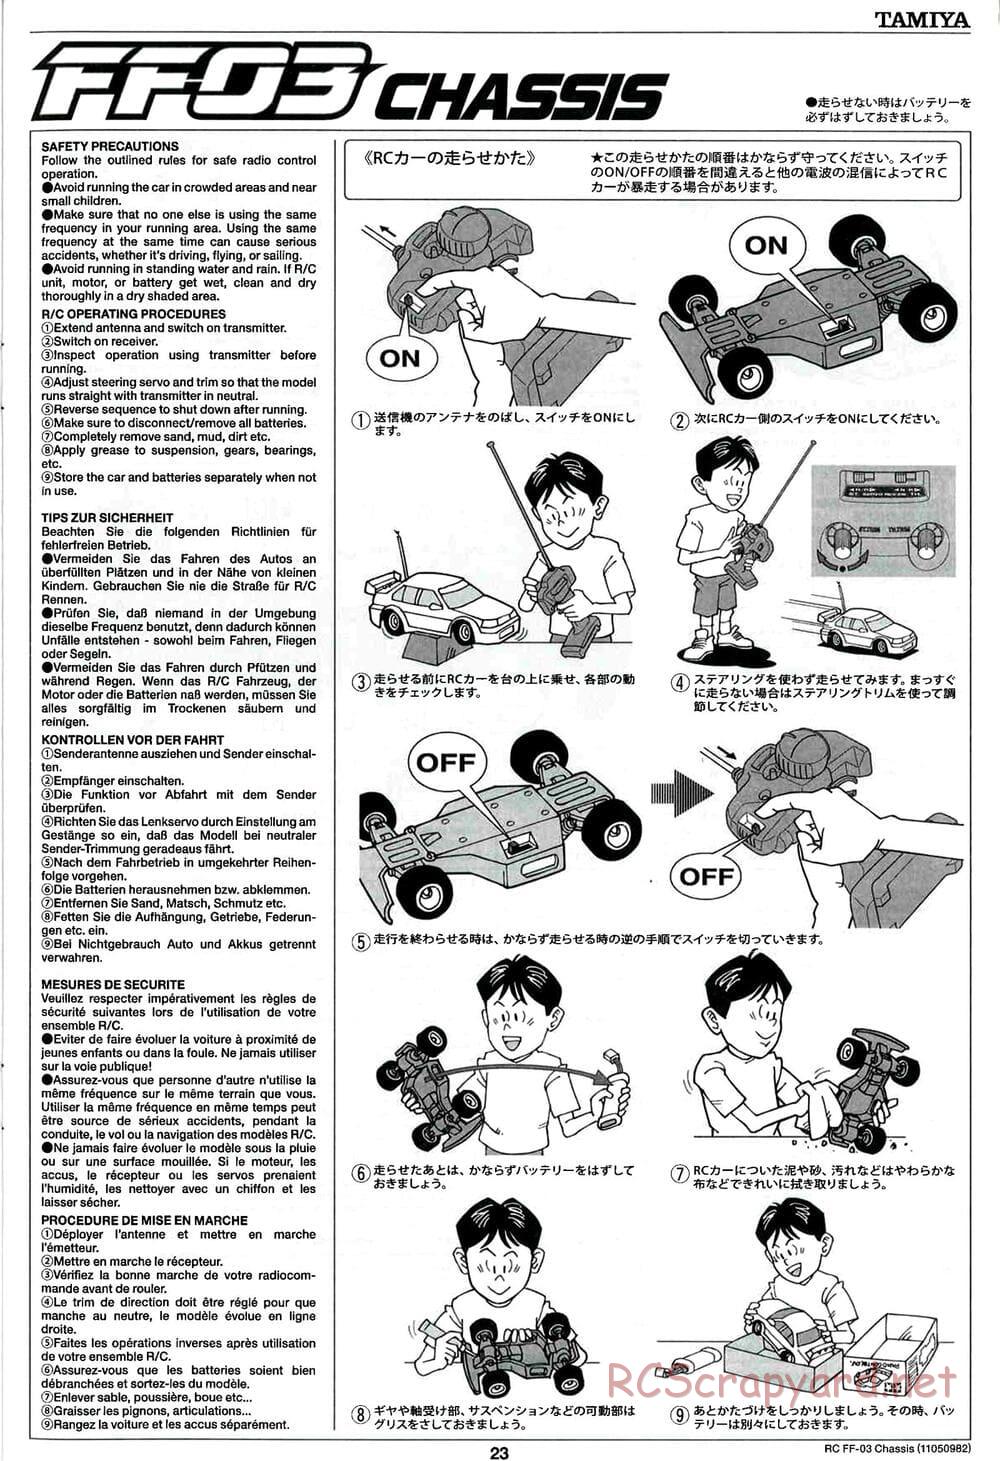 Tamiya - FF-03 Chassis - Manual - Page 23